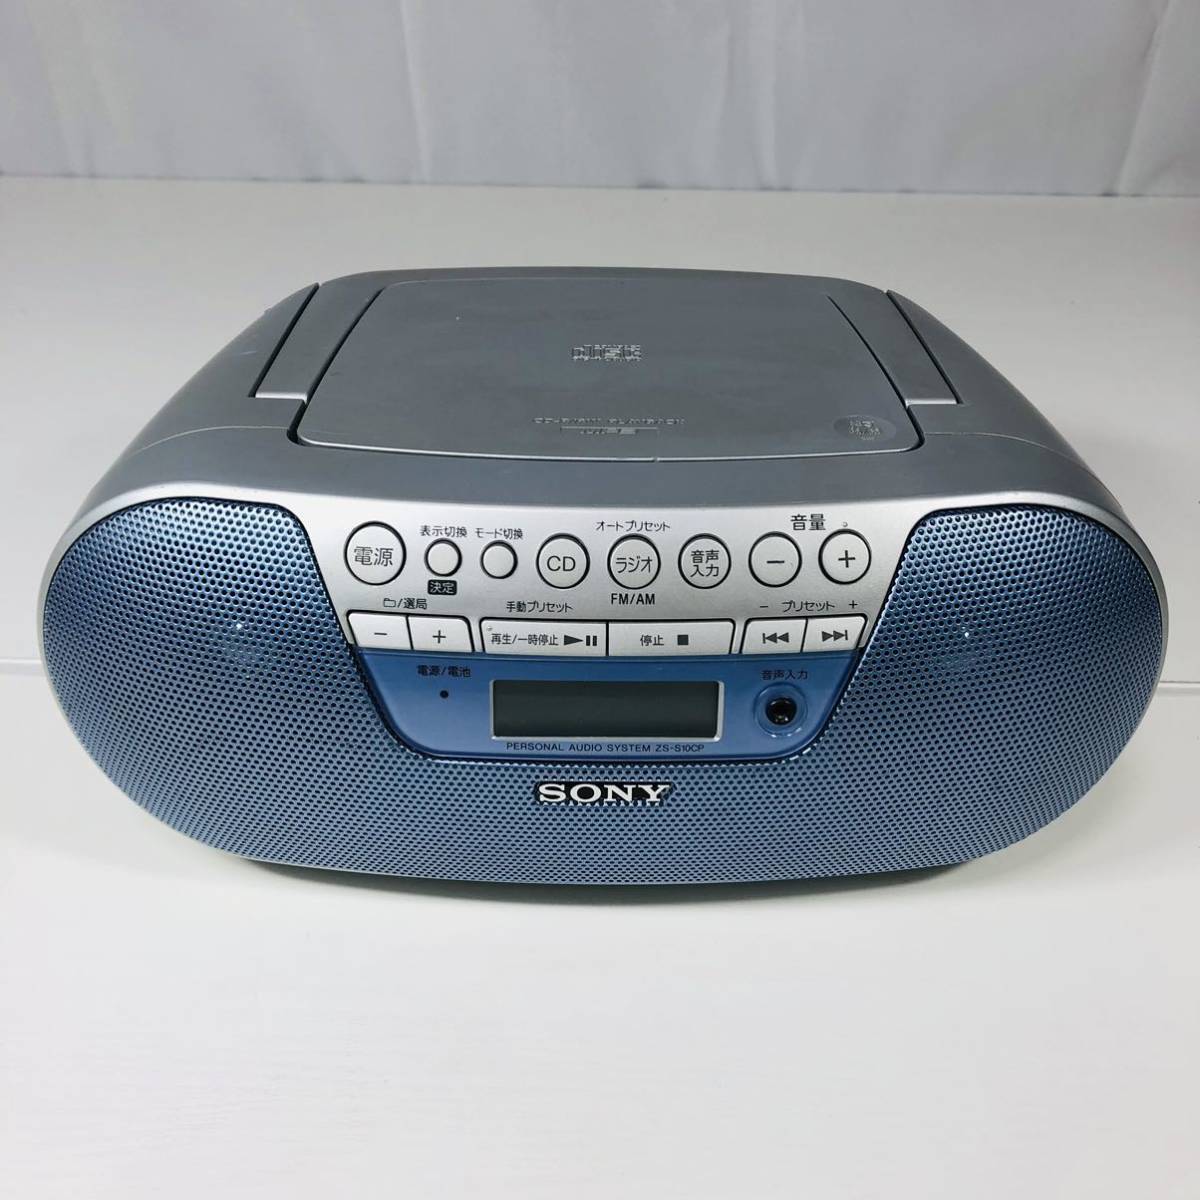  Junk SONY CD радио Sony ZS-S10CP корпус только CD, радио работа OK